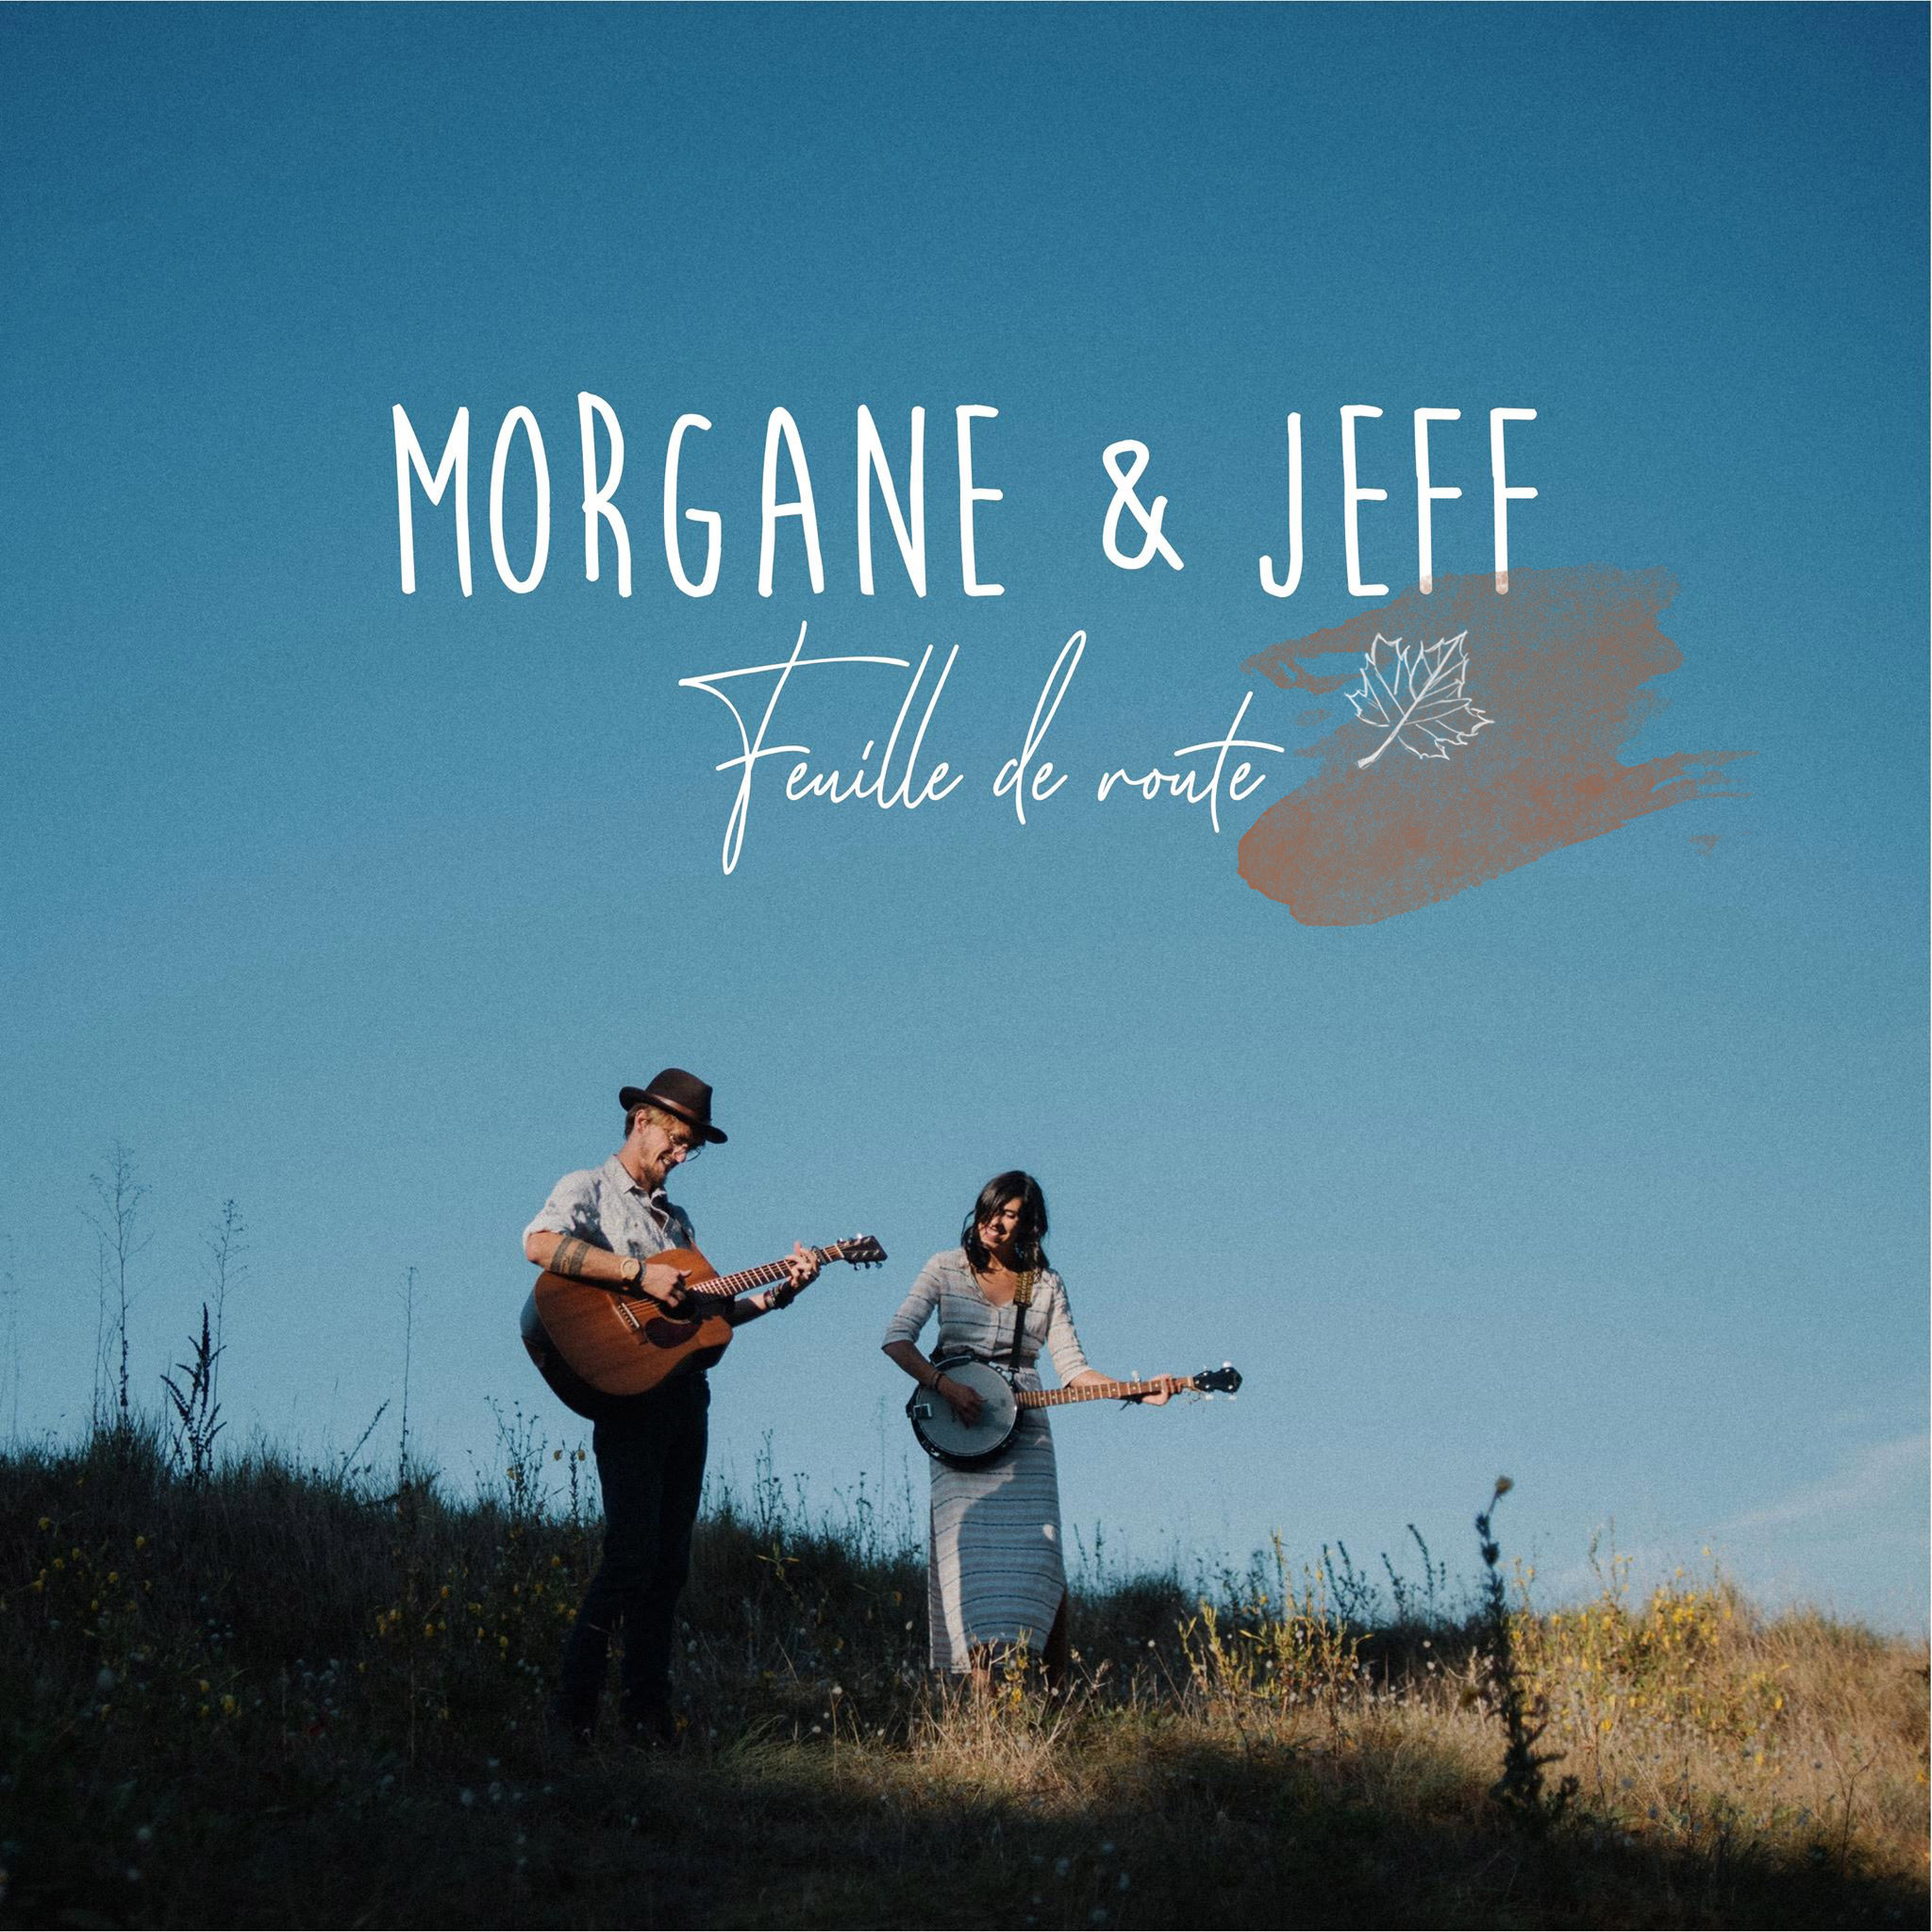 Morgane & Jeff - "Feuille de route"